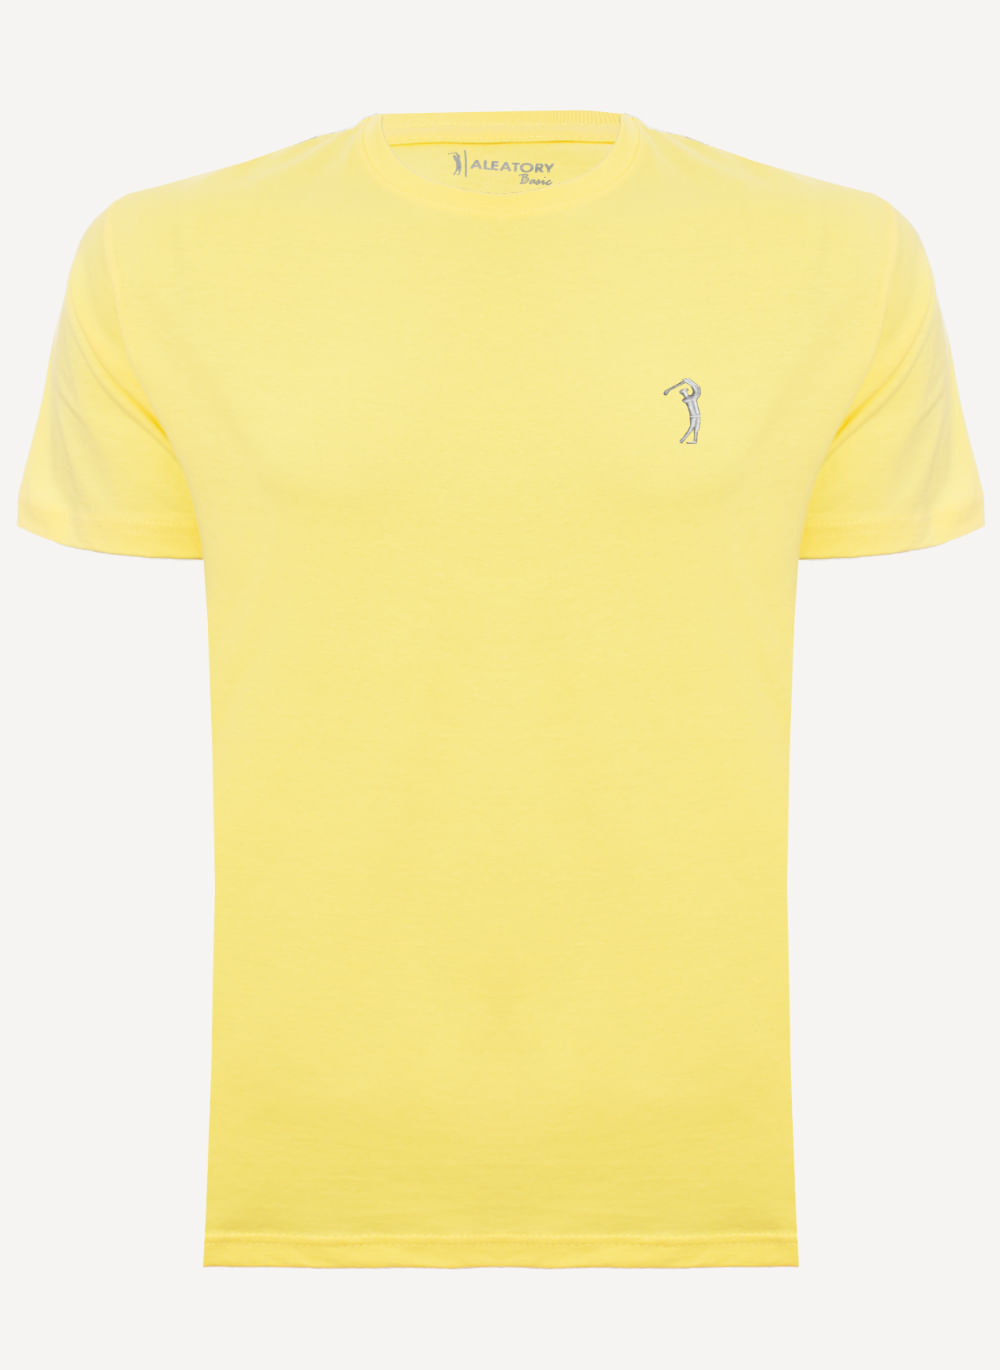 Camiseta-Amarelo-Lisa-Aleatory-Amarelo-P